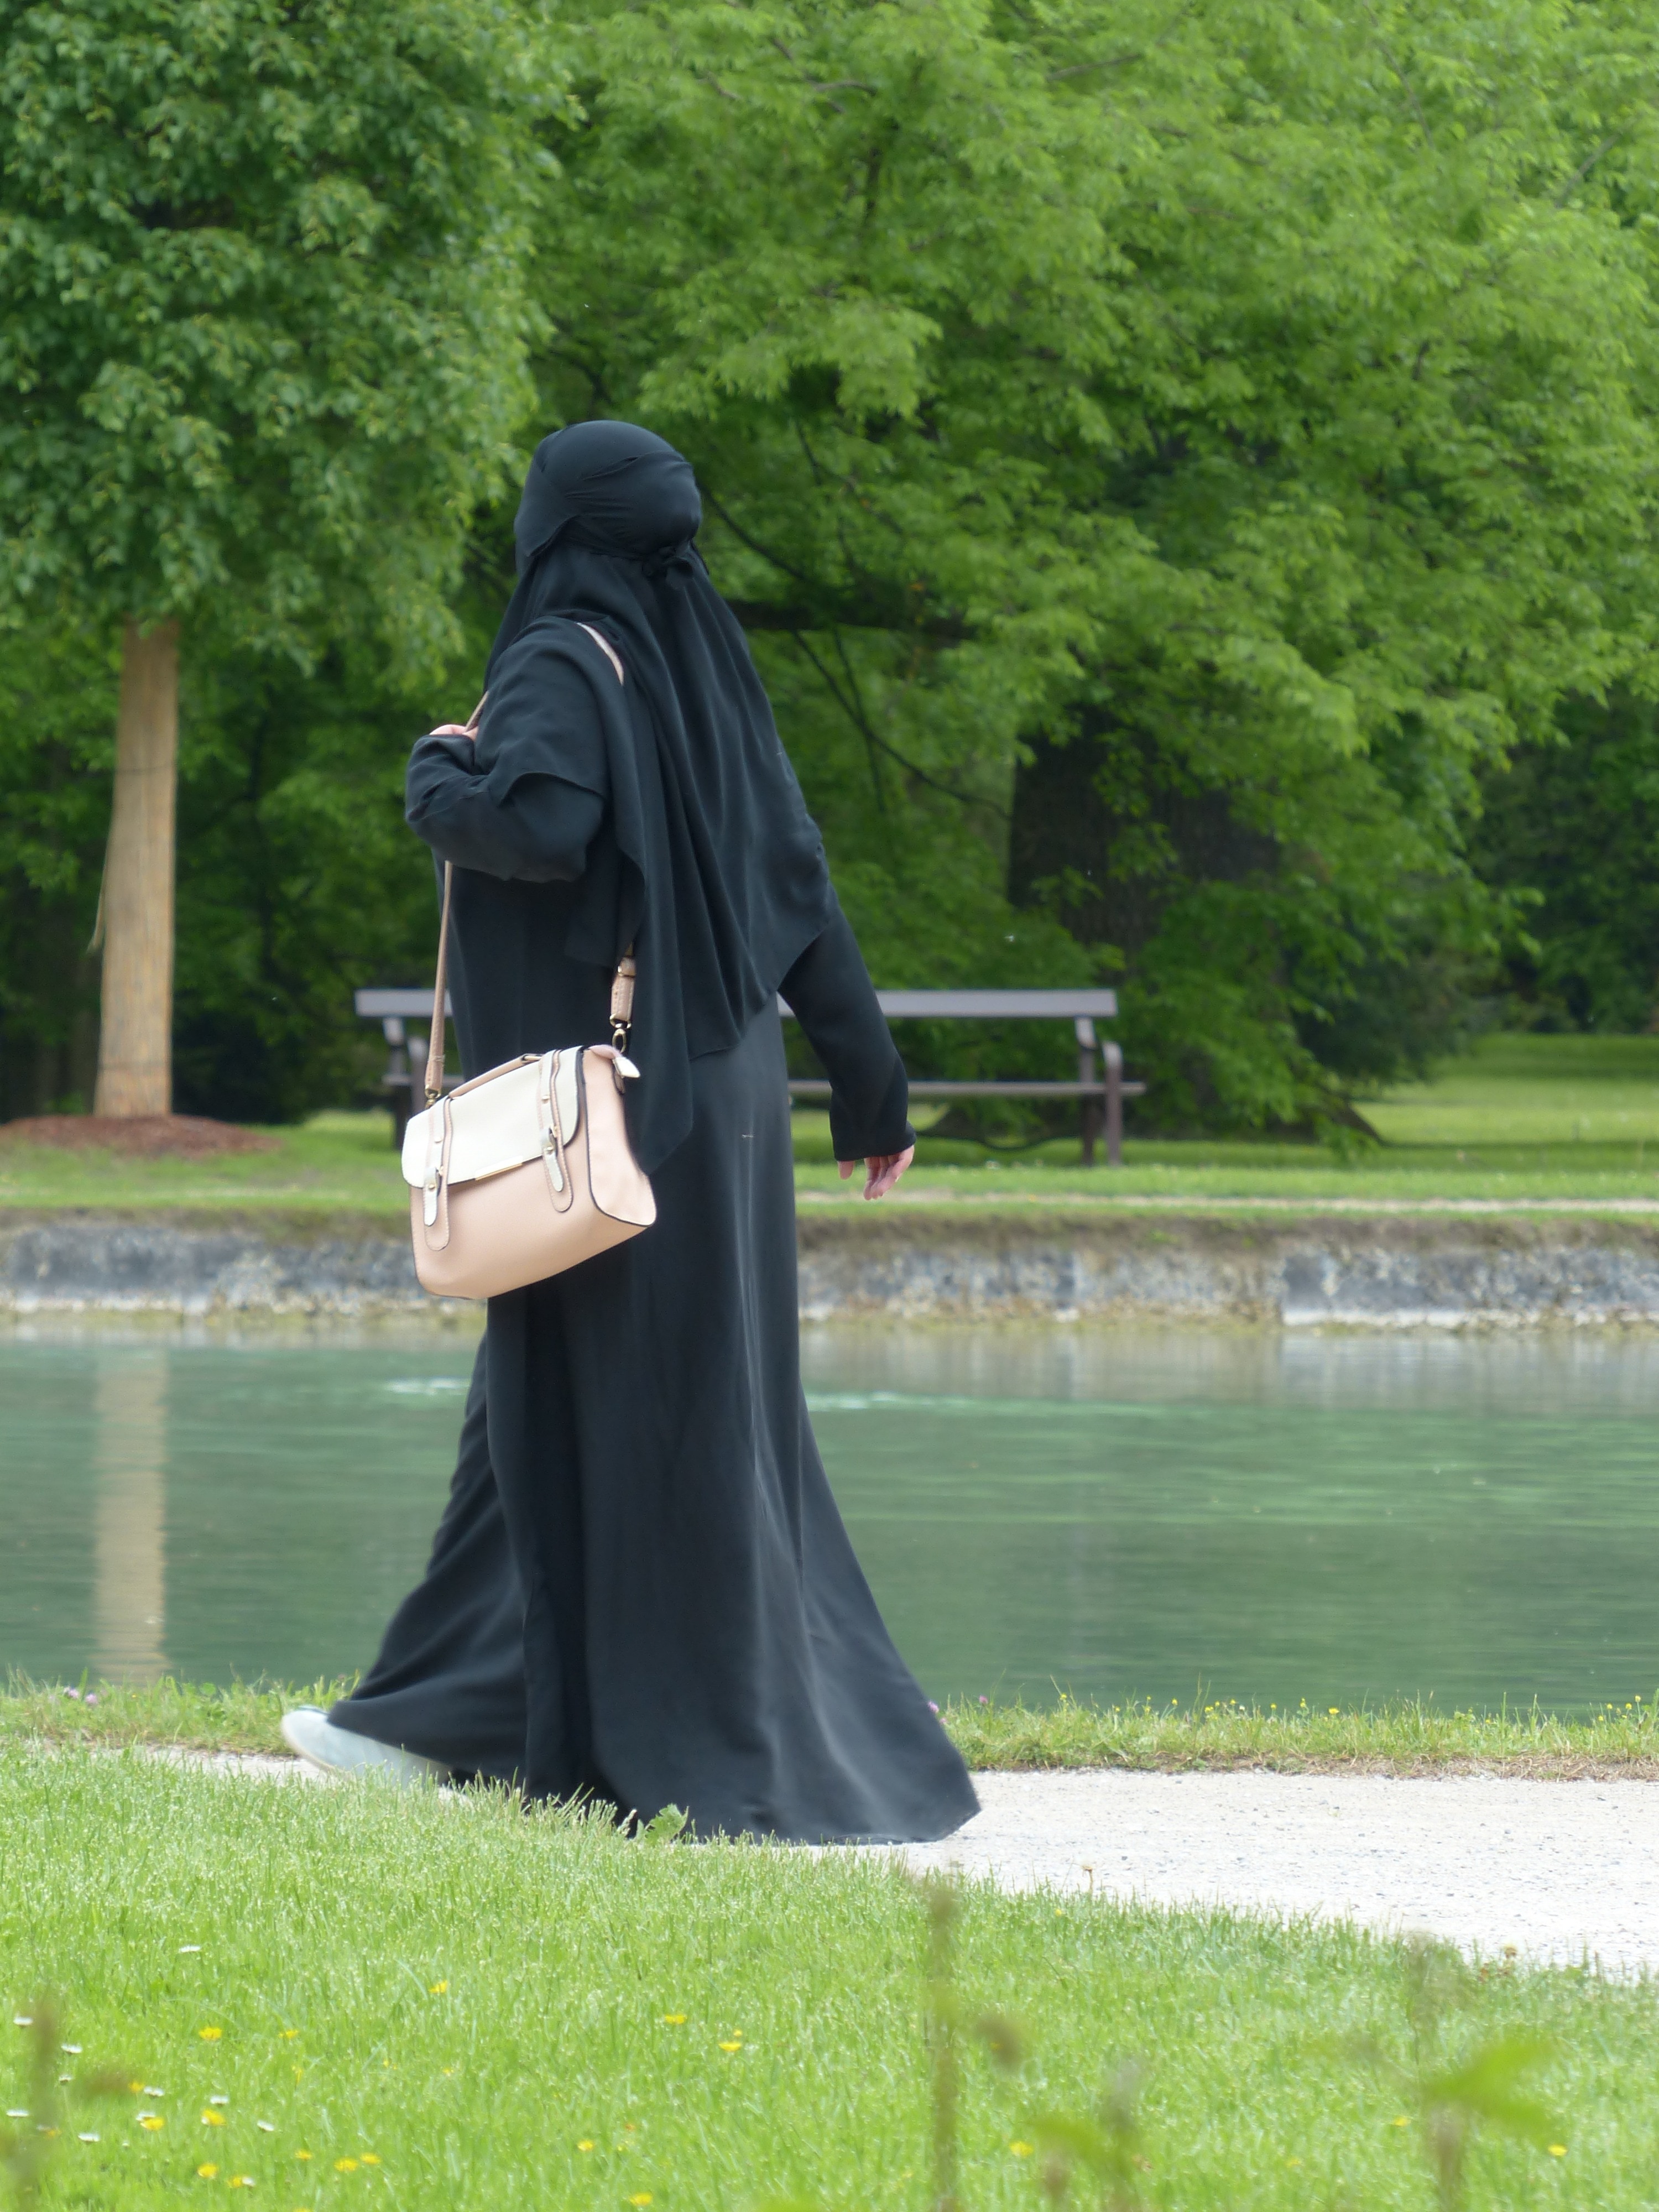 women's black hijab and abaya